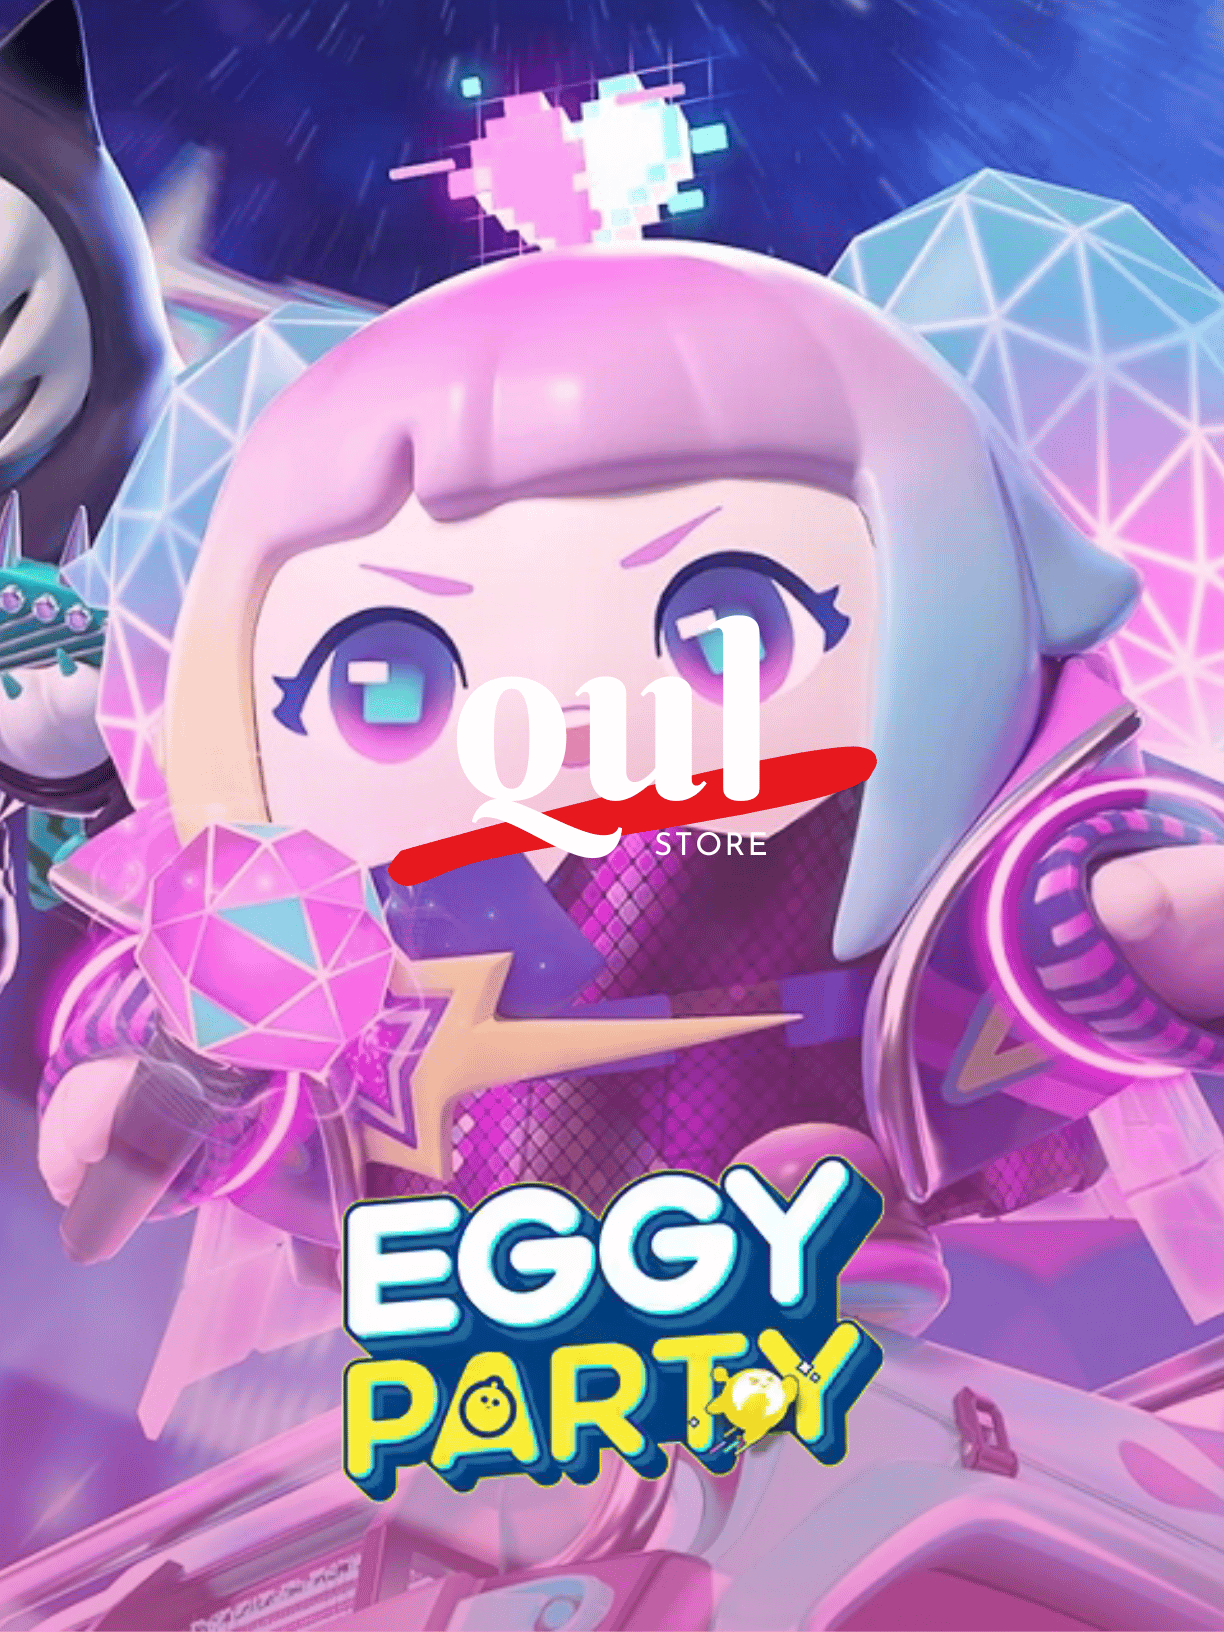 Eggy party